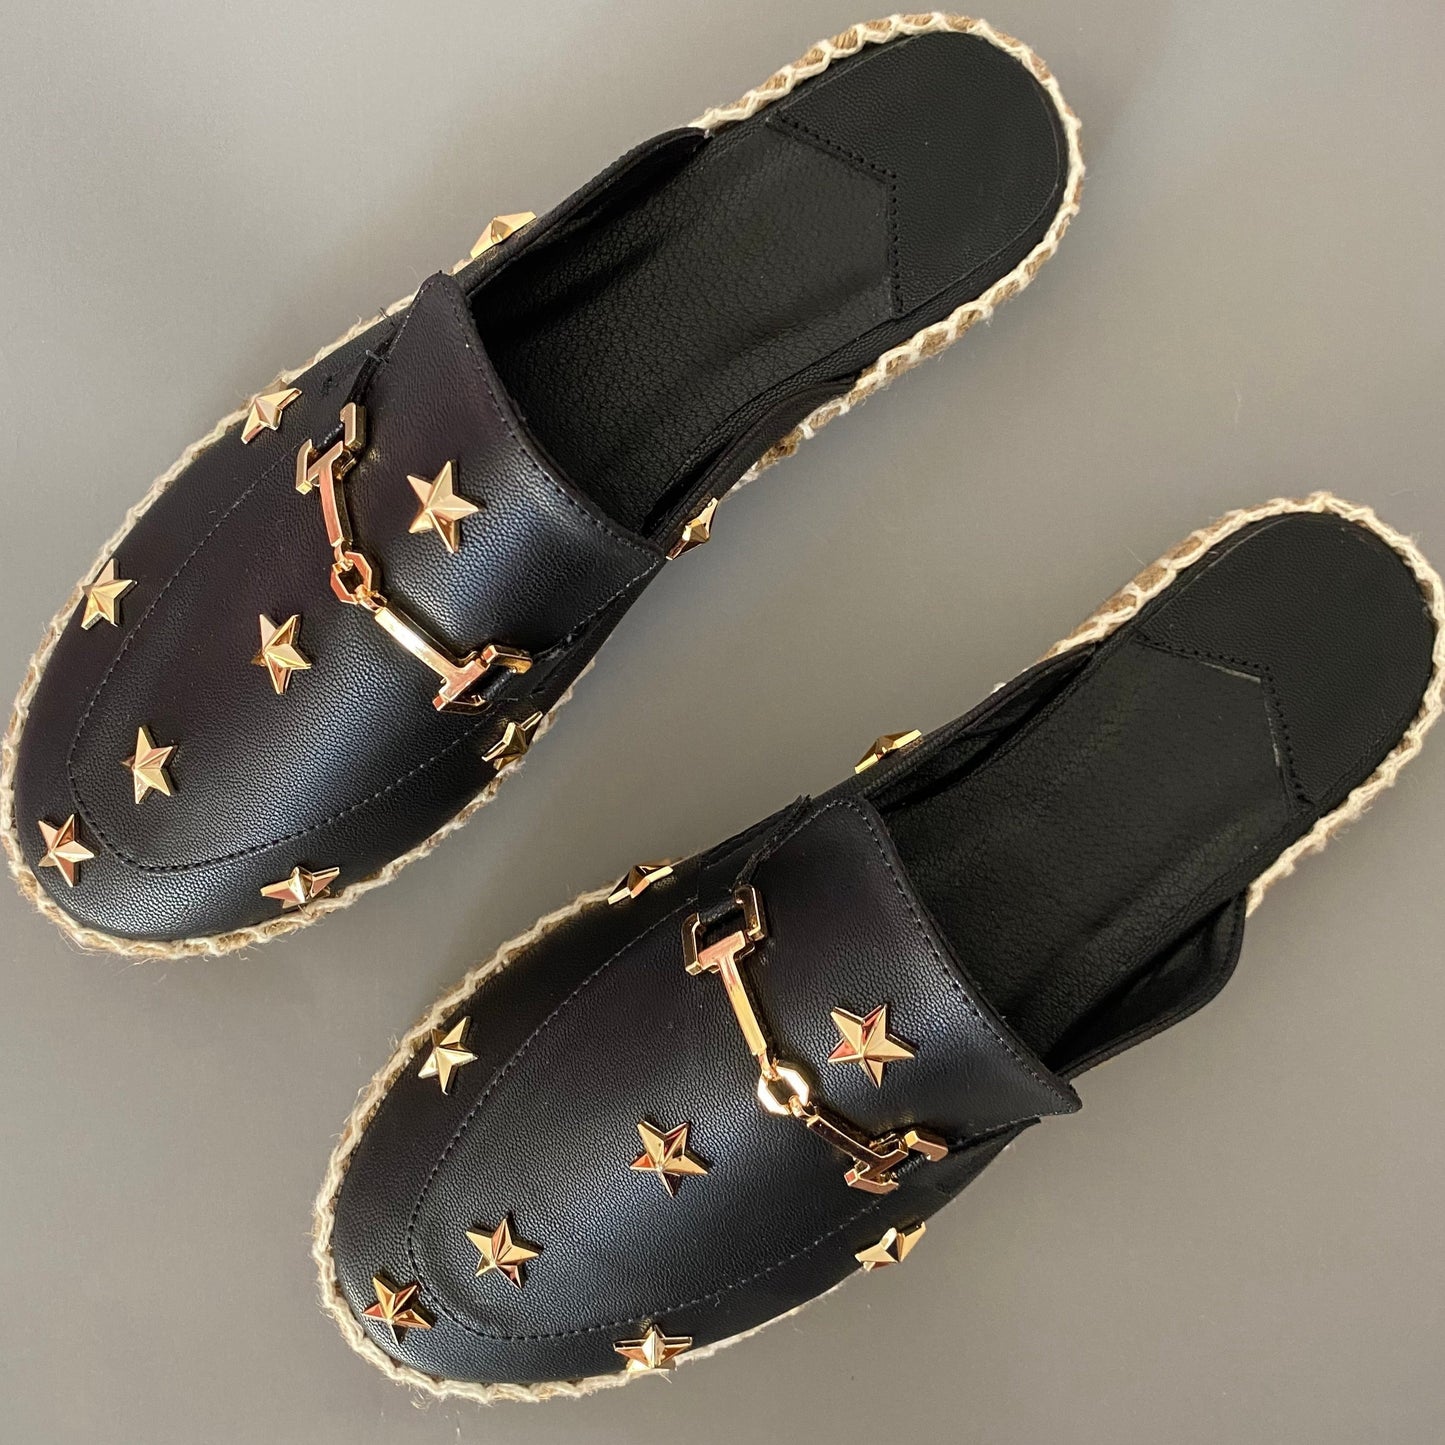 Zapatos Espadrilles Estilo Loafer Mules para Mujer